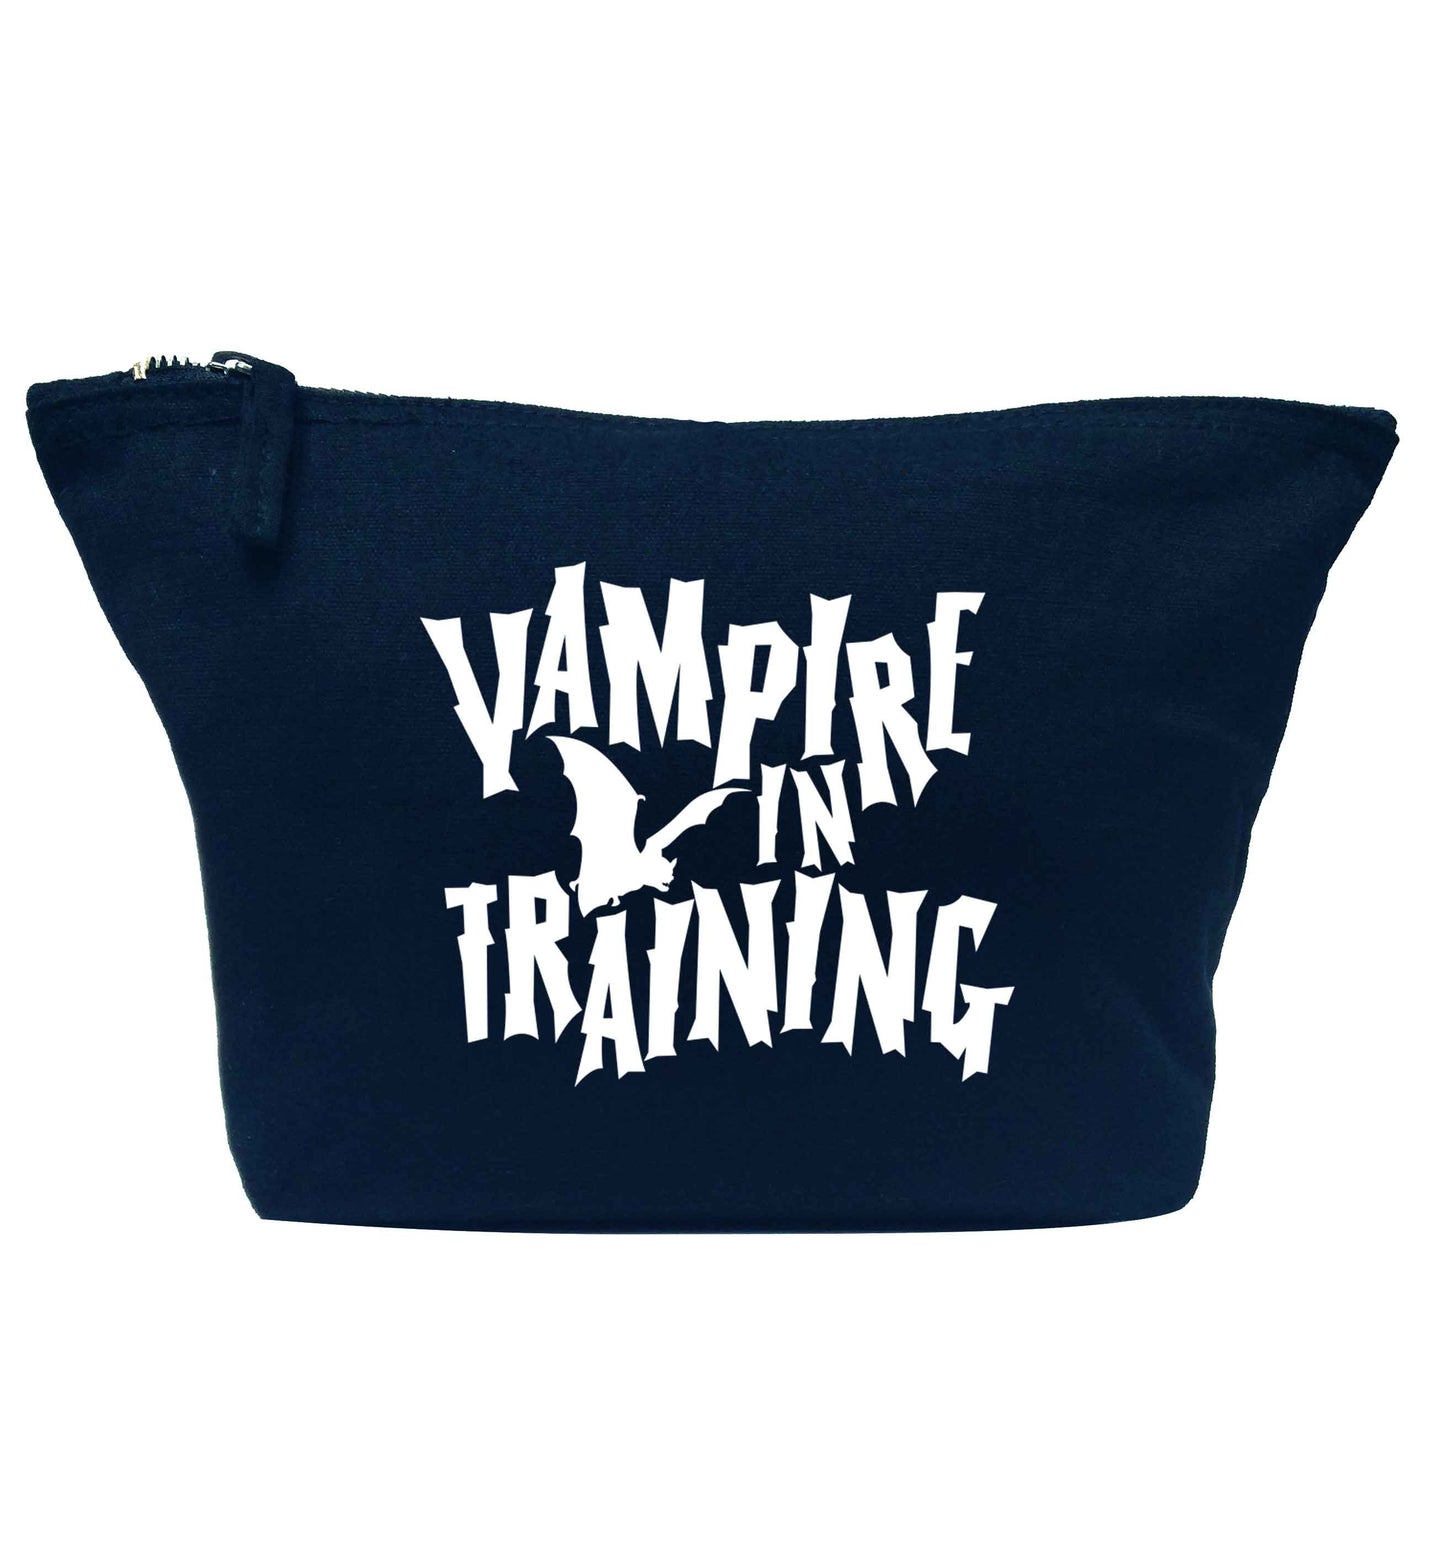 Vampire in training navy makeup bag